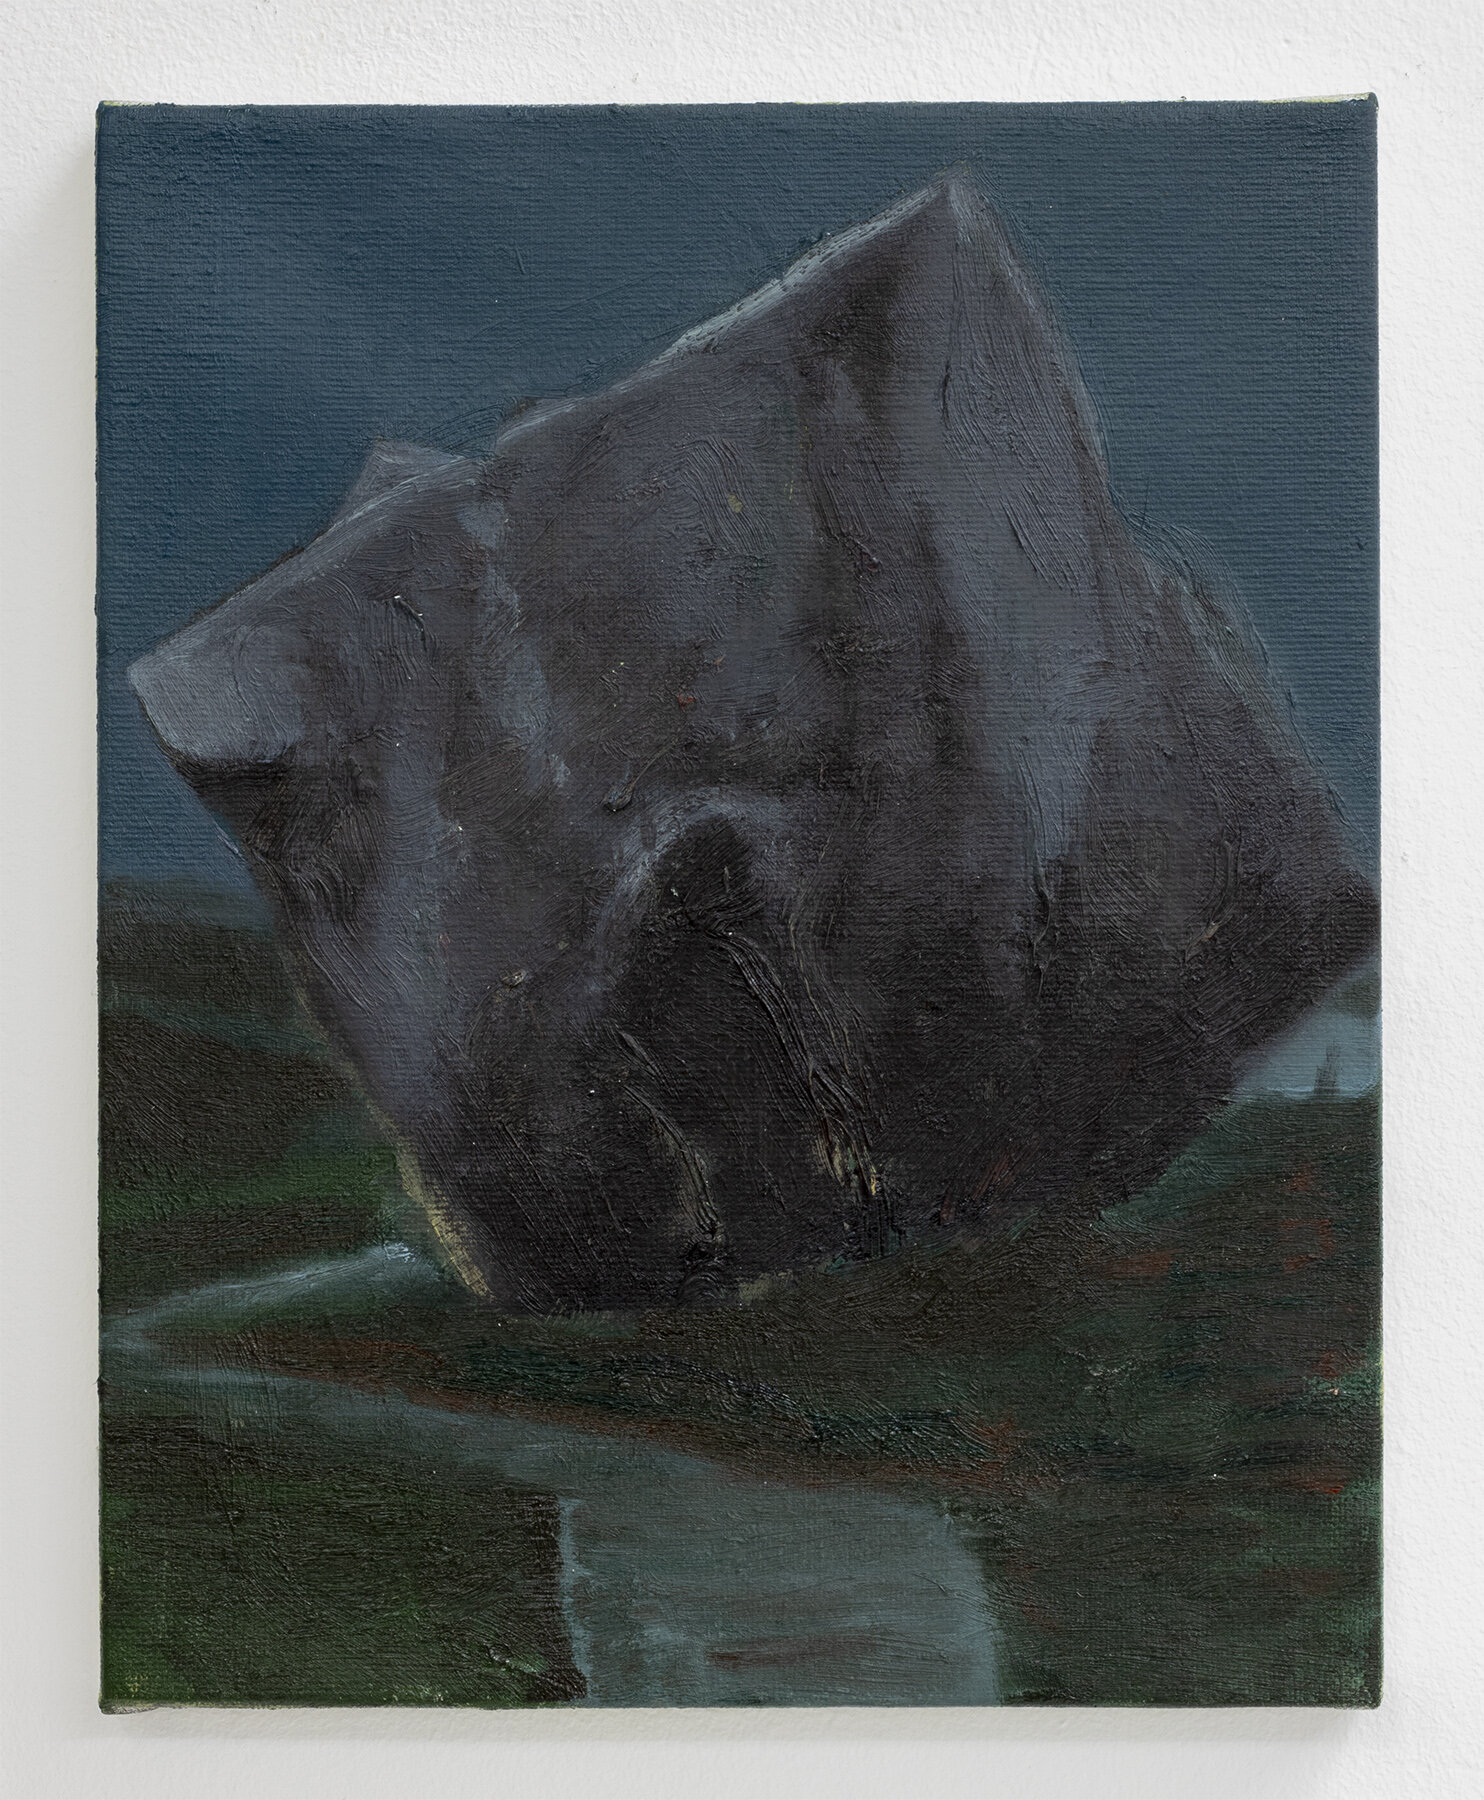 The Diamond or Swindon Stone at Midnight, 2021